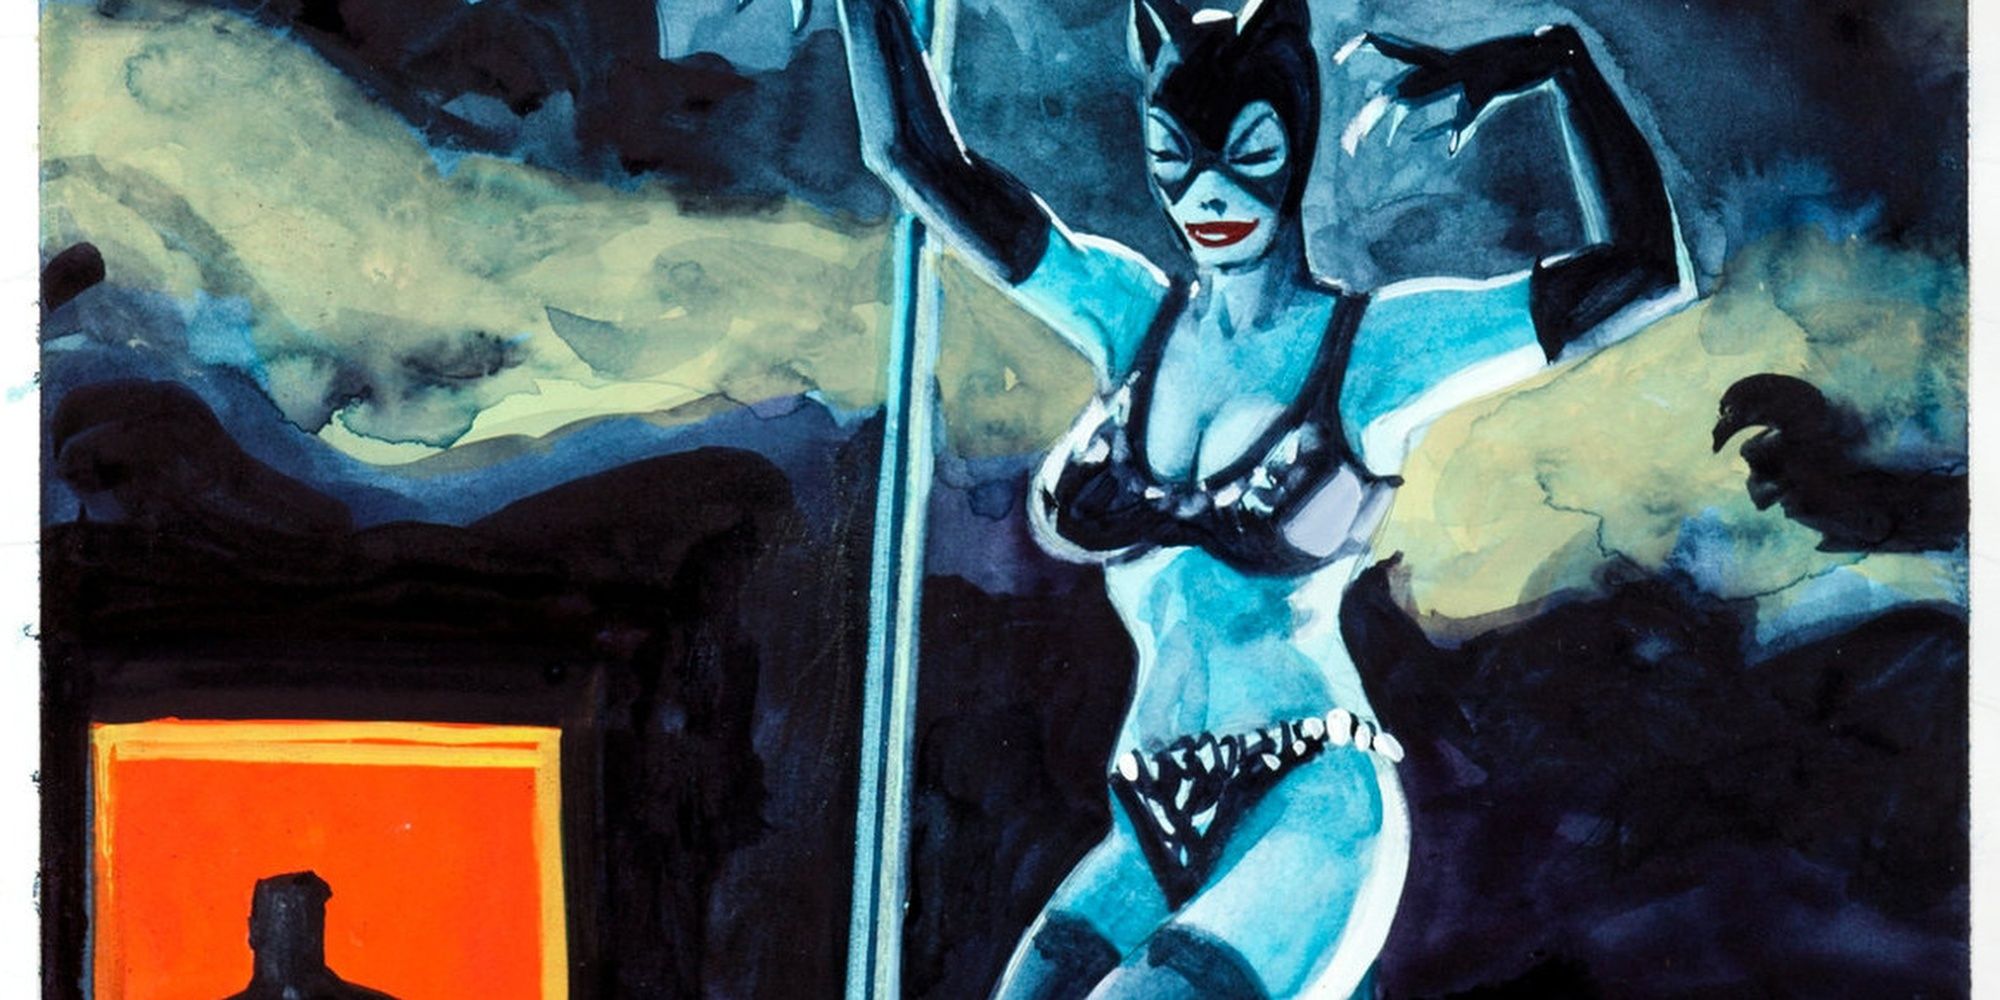 Женщина-кошка в образе танцовщицы на шесте в фильме «Бэтмен Thrillkiller Cropped»